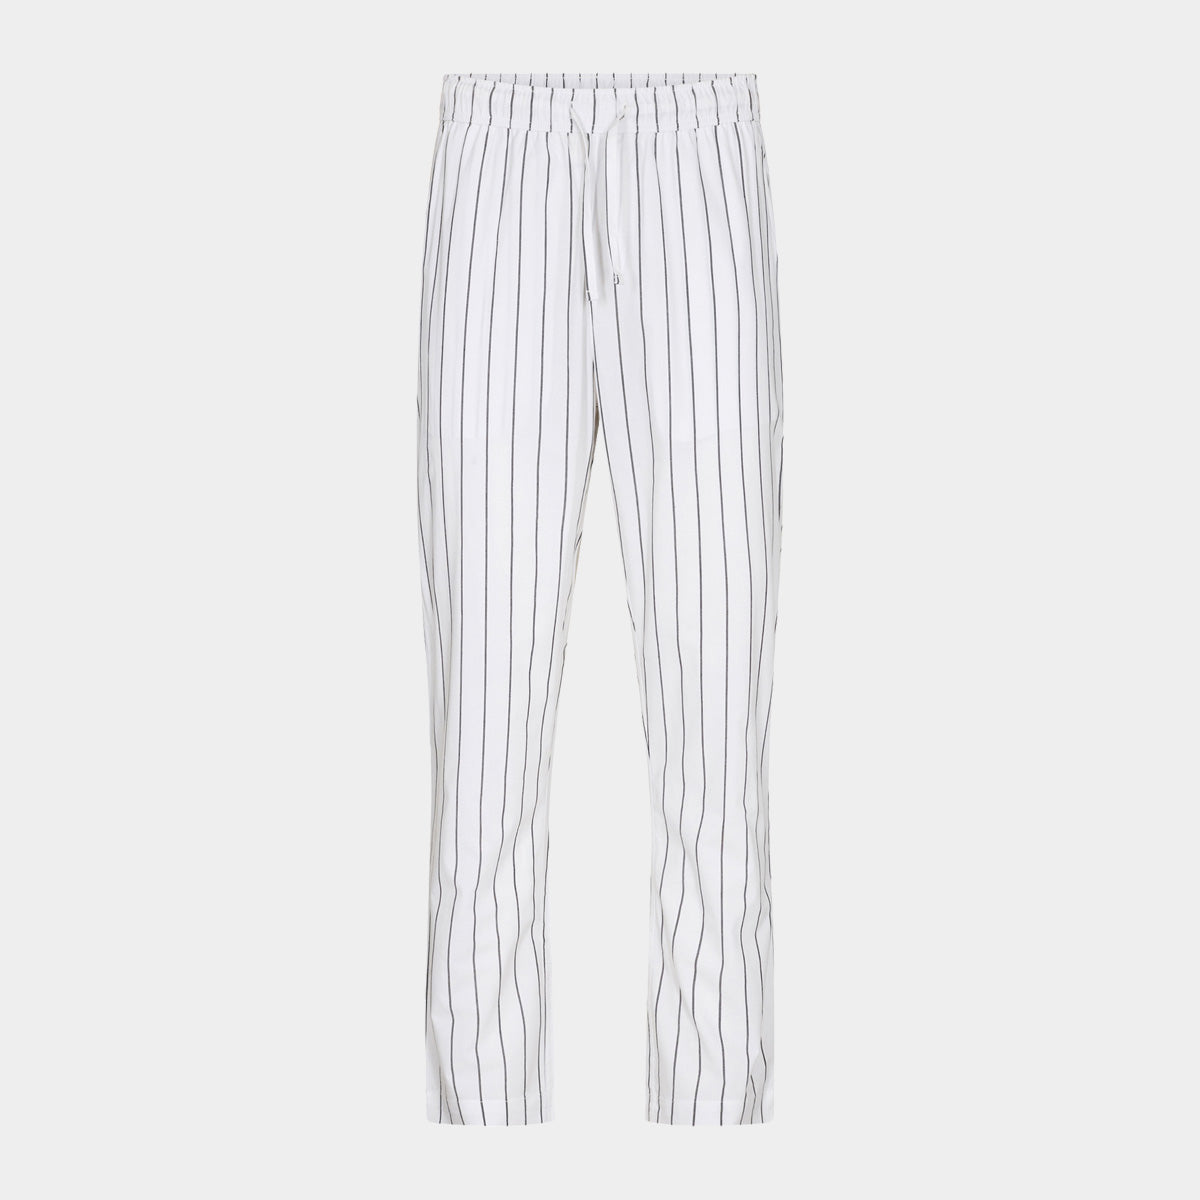 Billede af Hvide bambus pyjamasbukser med smalle grå striber fra JBS of Denmark, M hos Bambustøj.dk